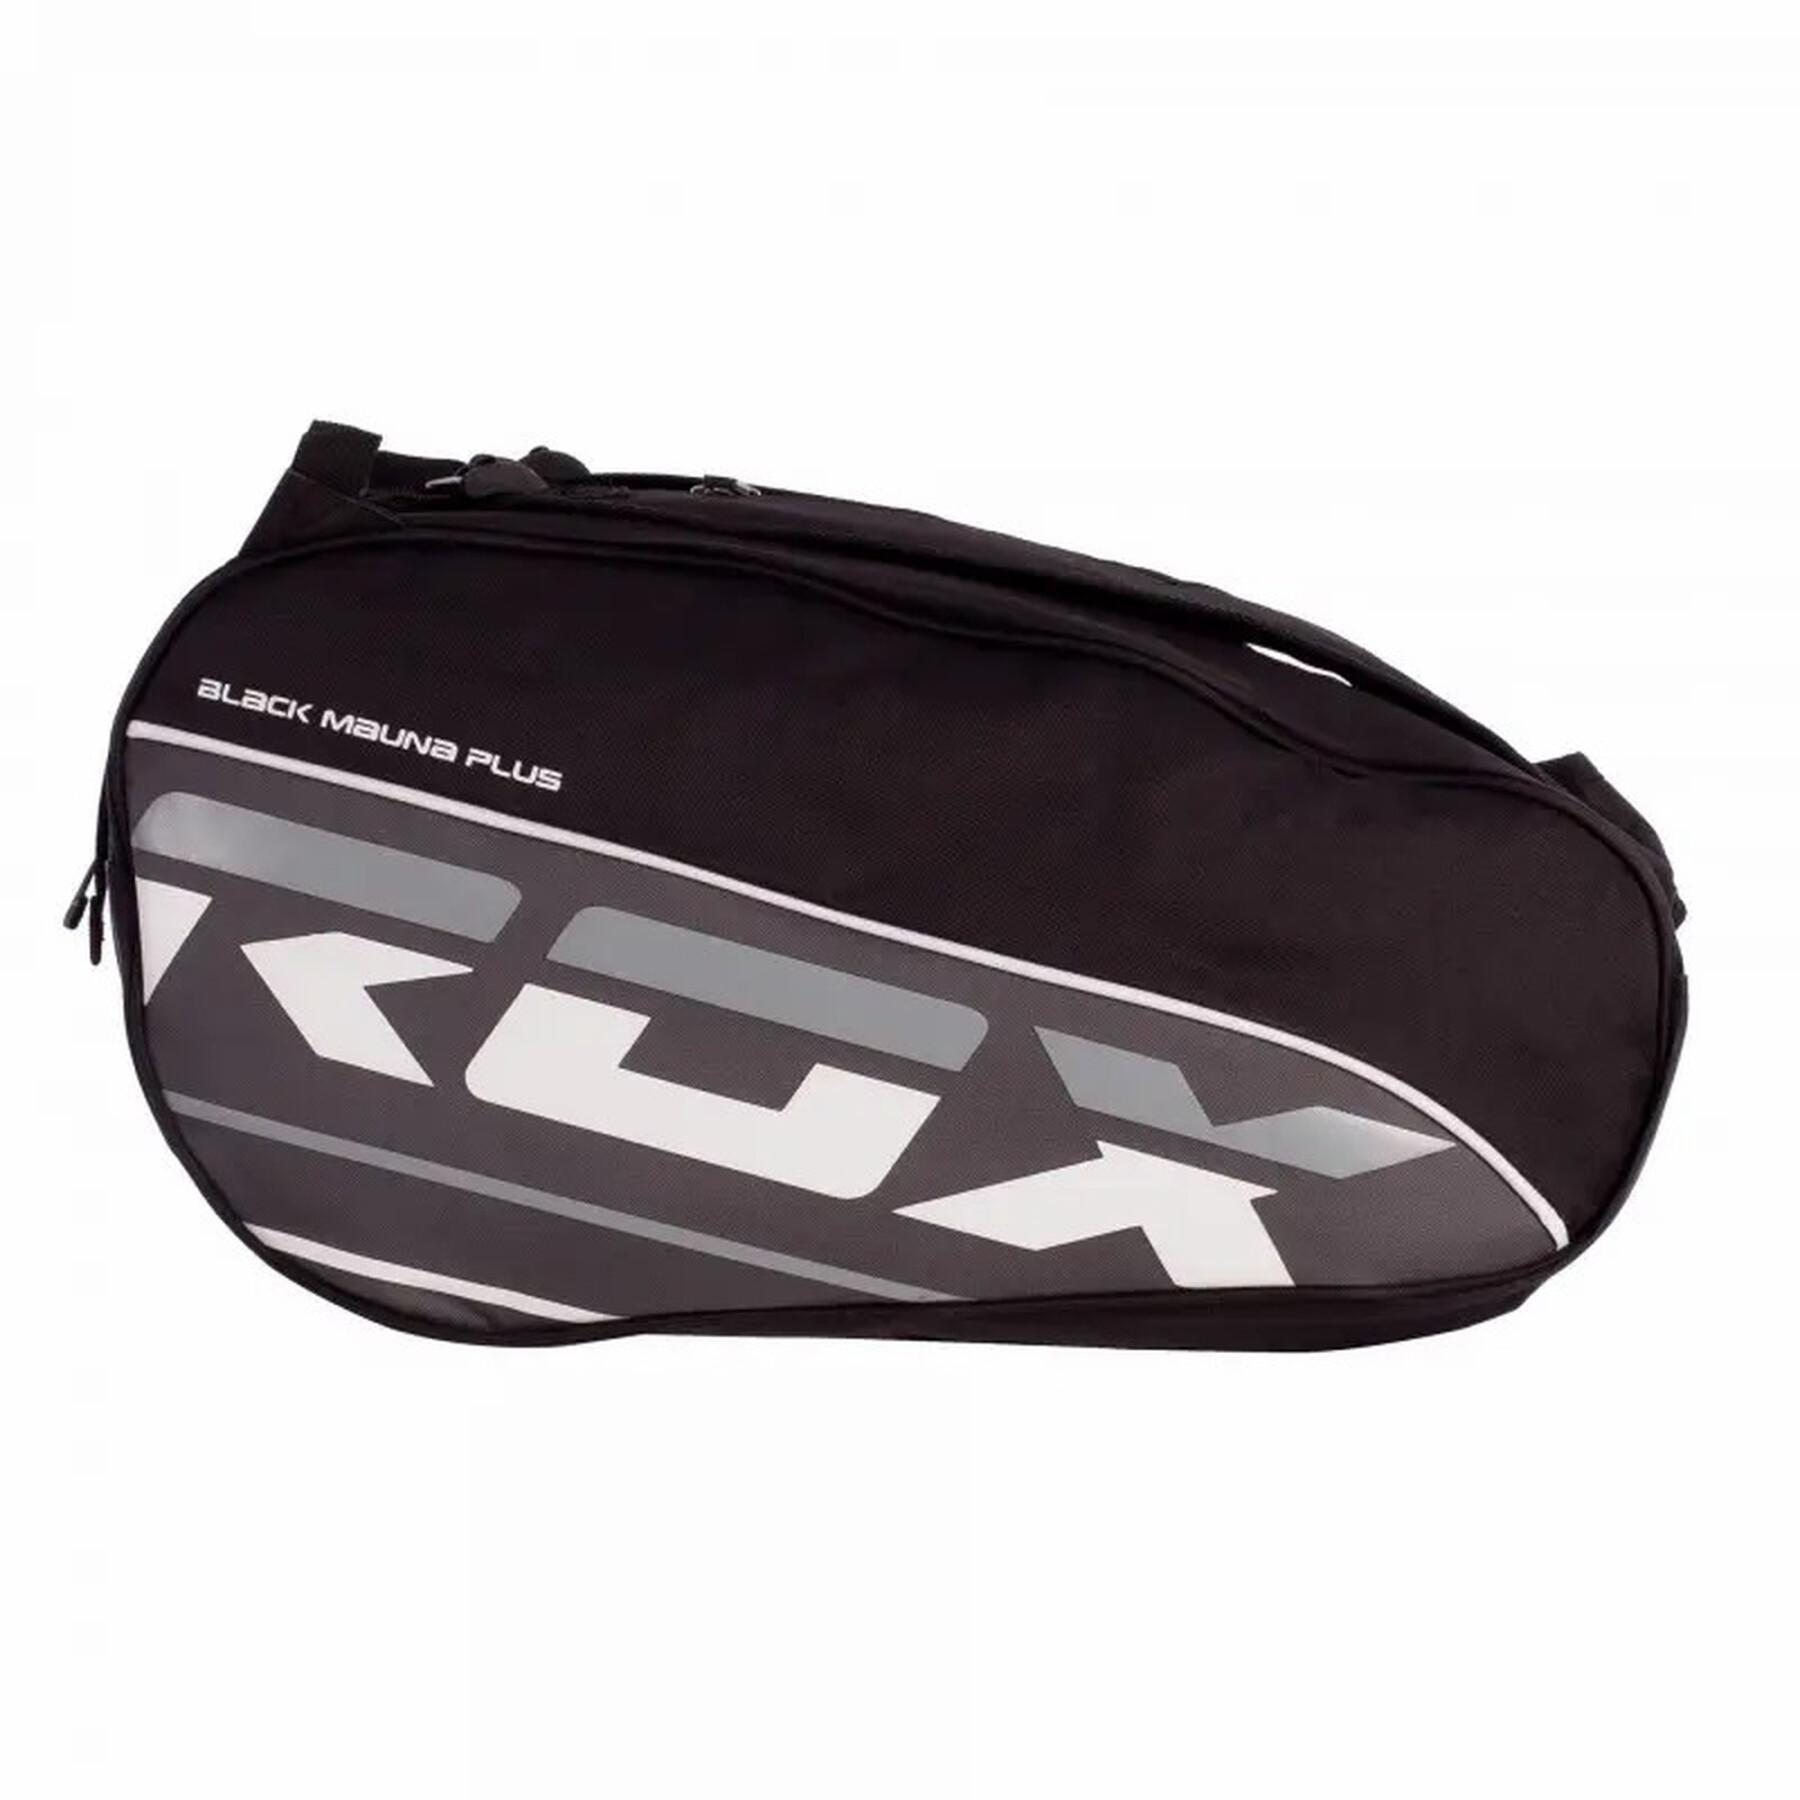 Racket bag from padel Rox Mauna Plus